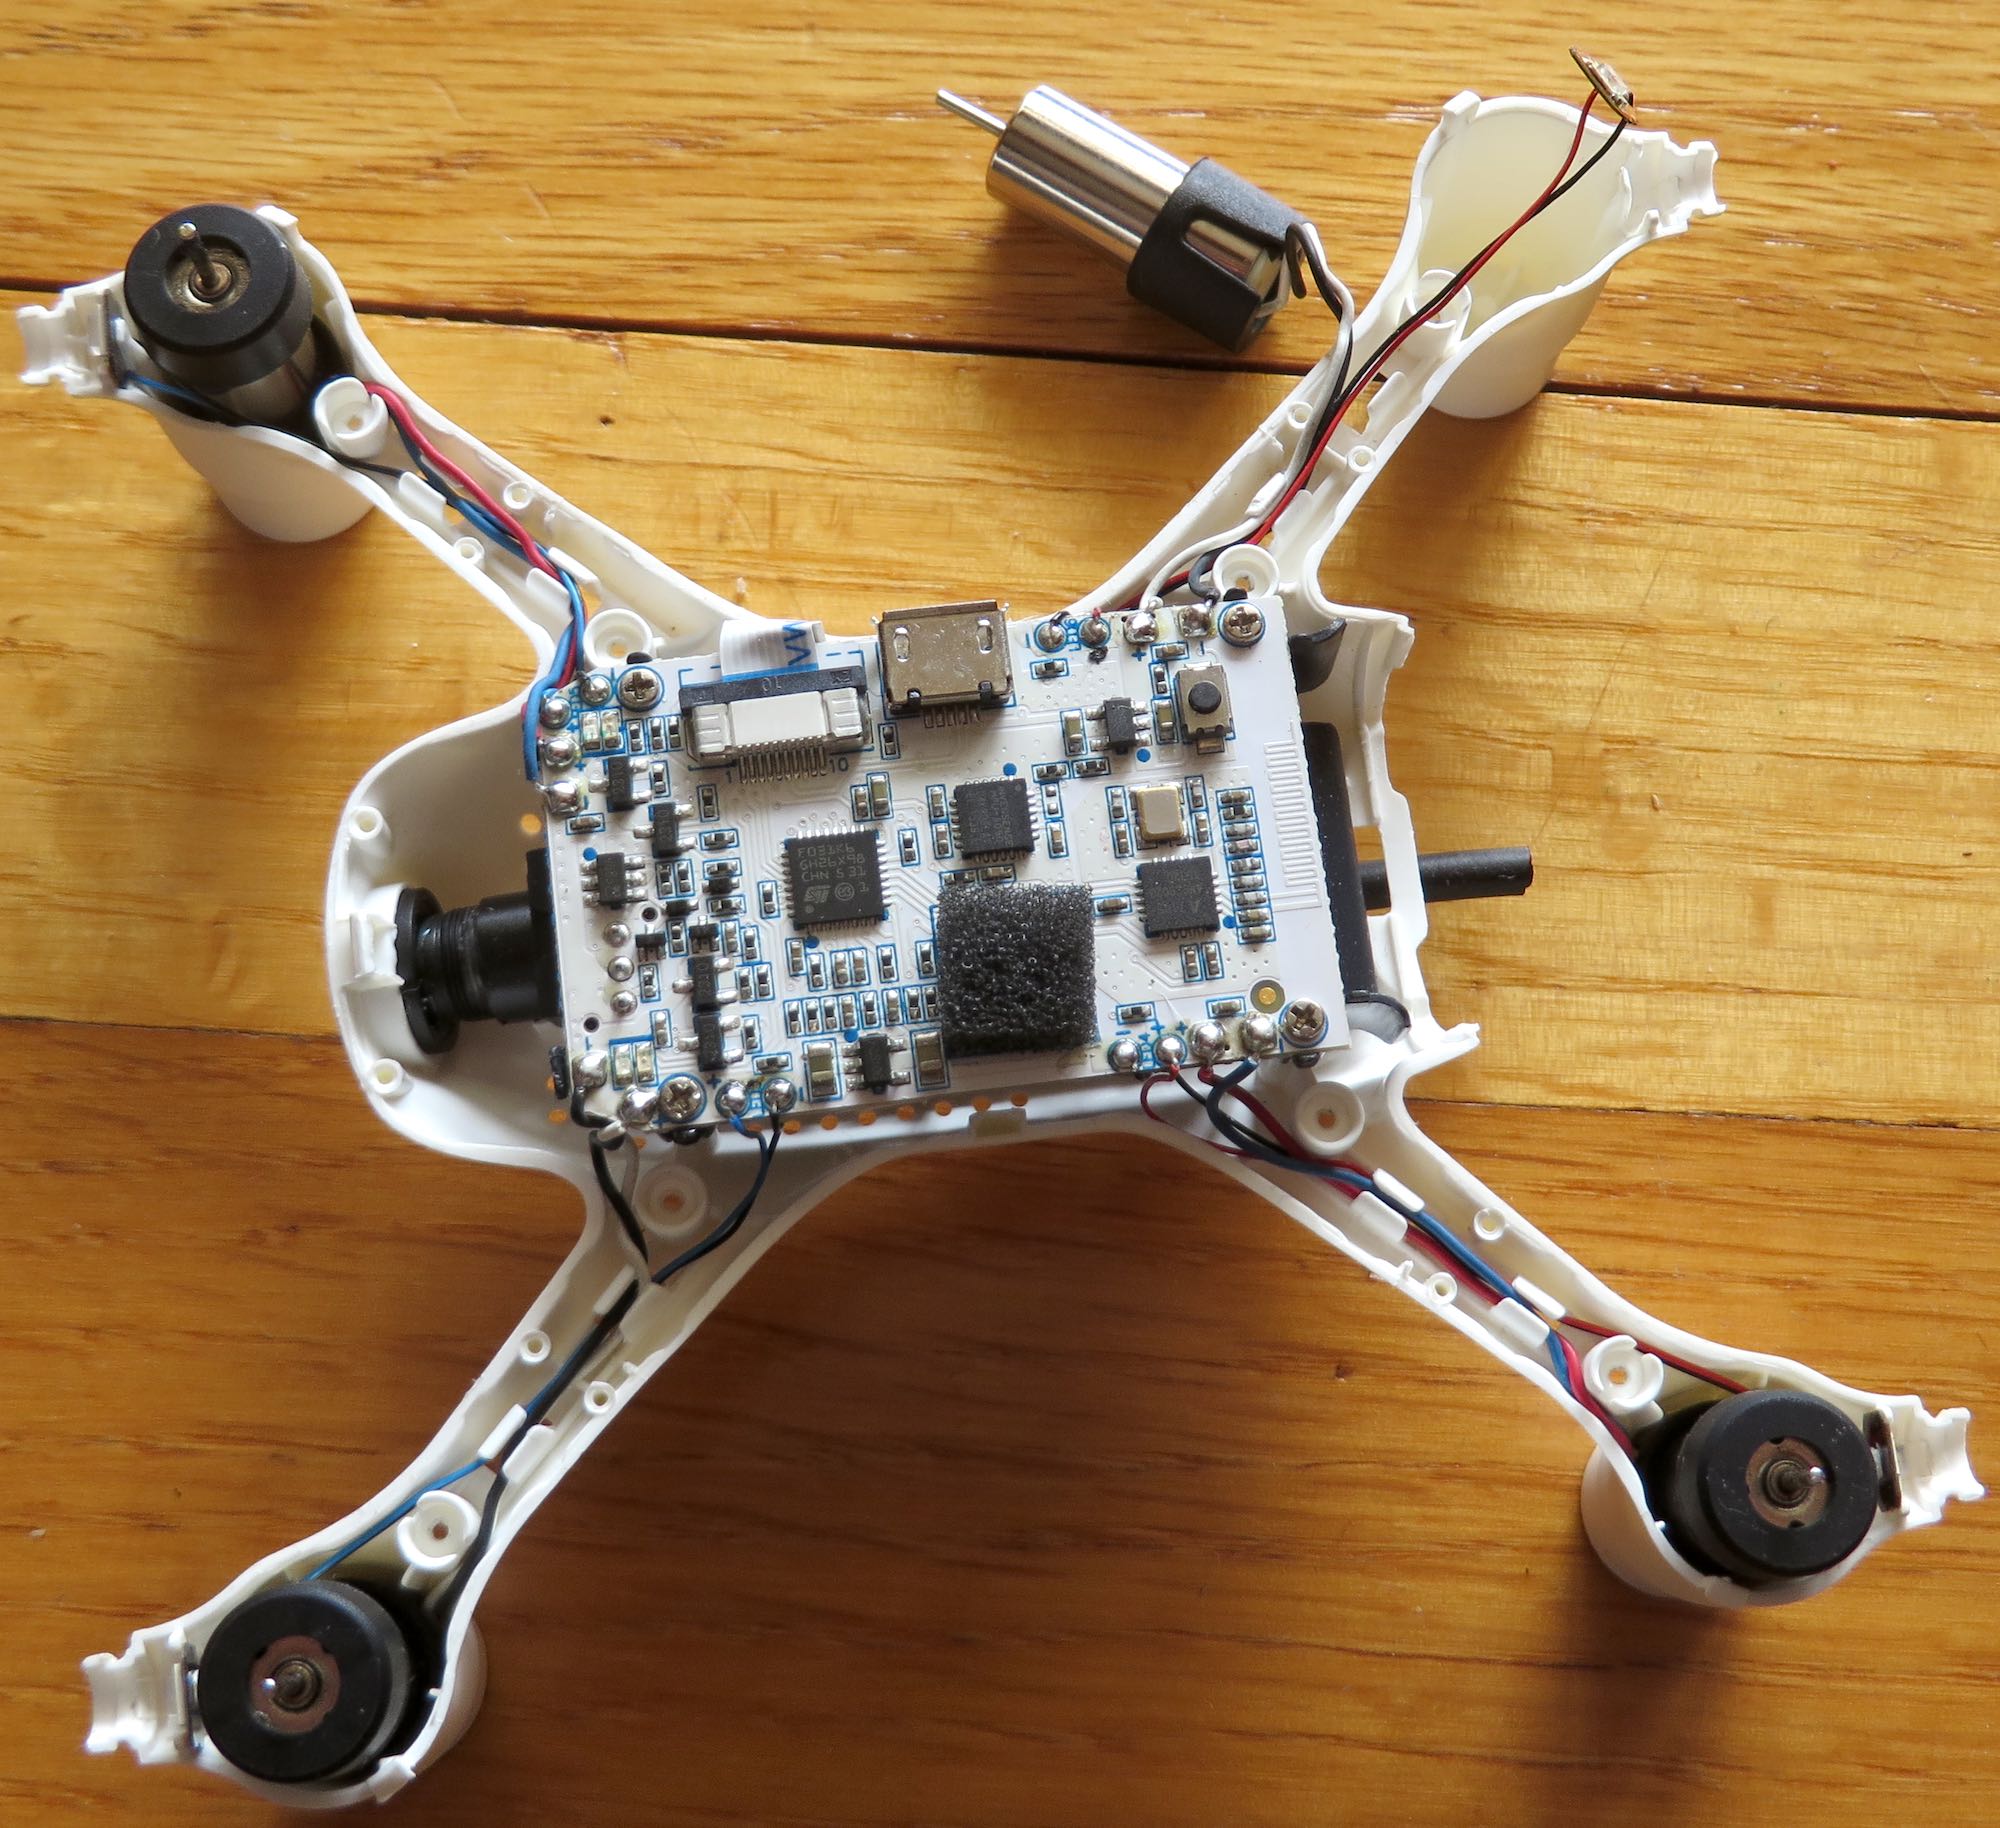 FPV drone teardown